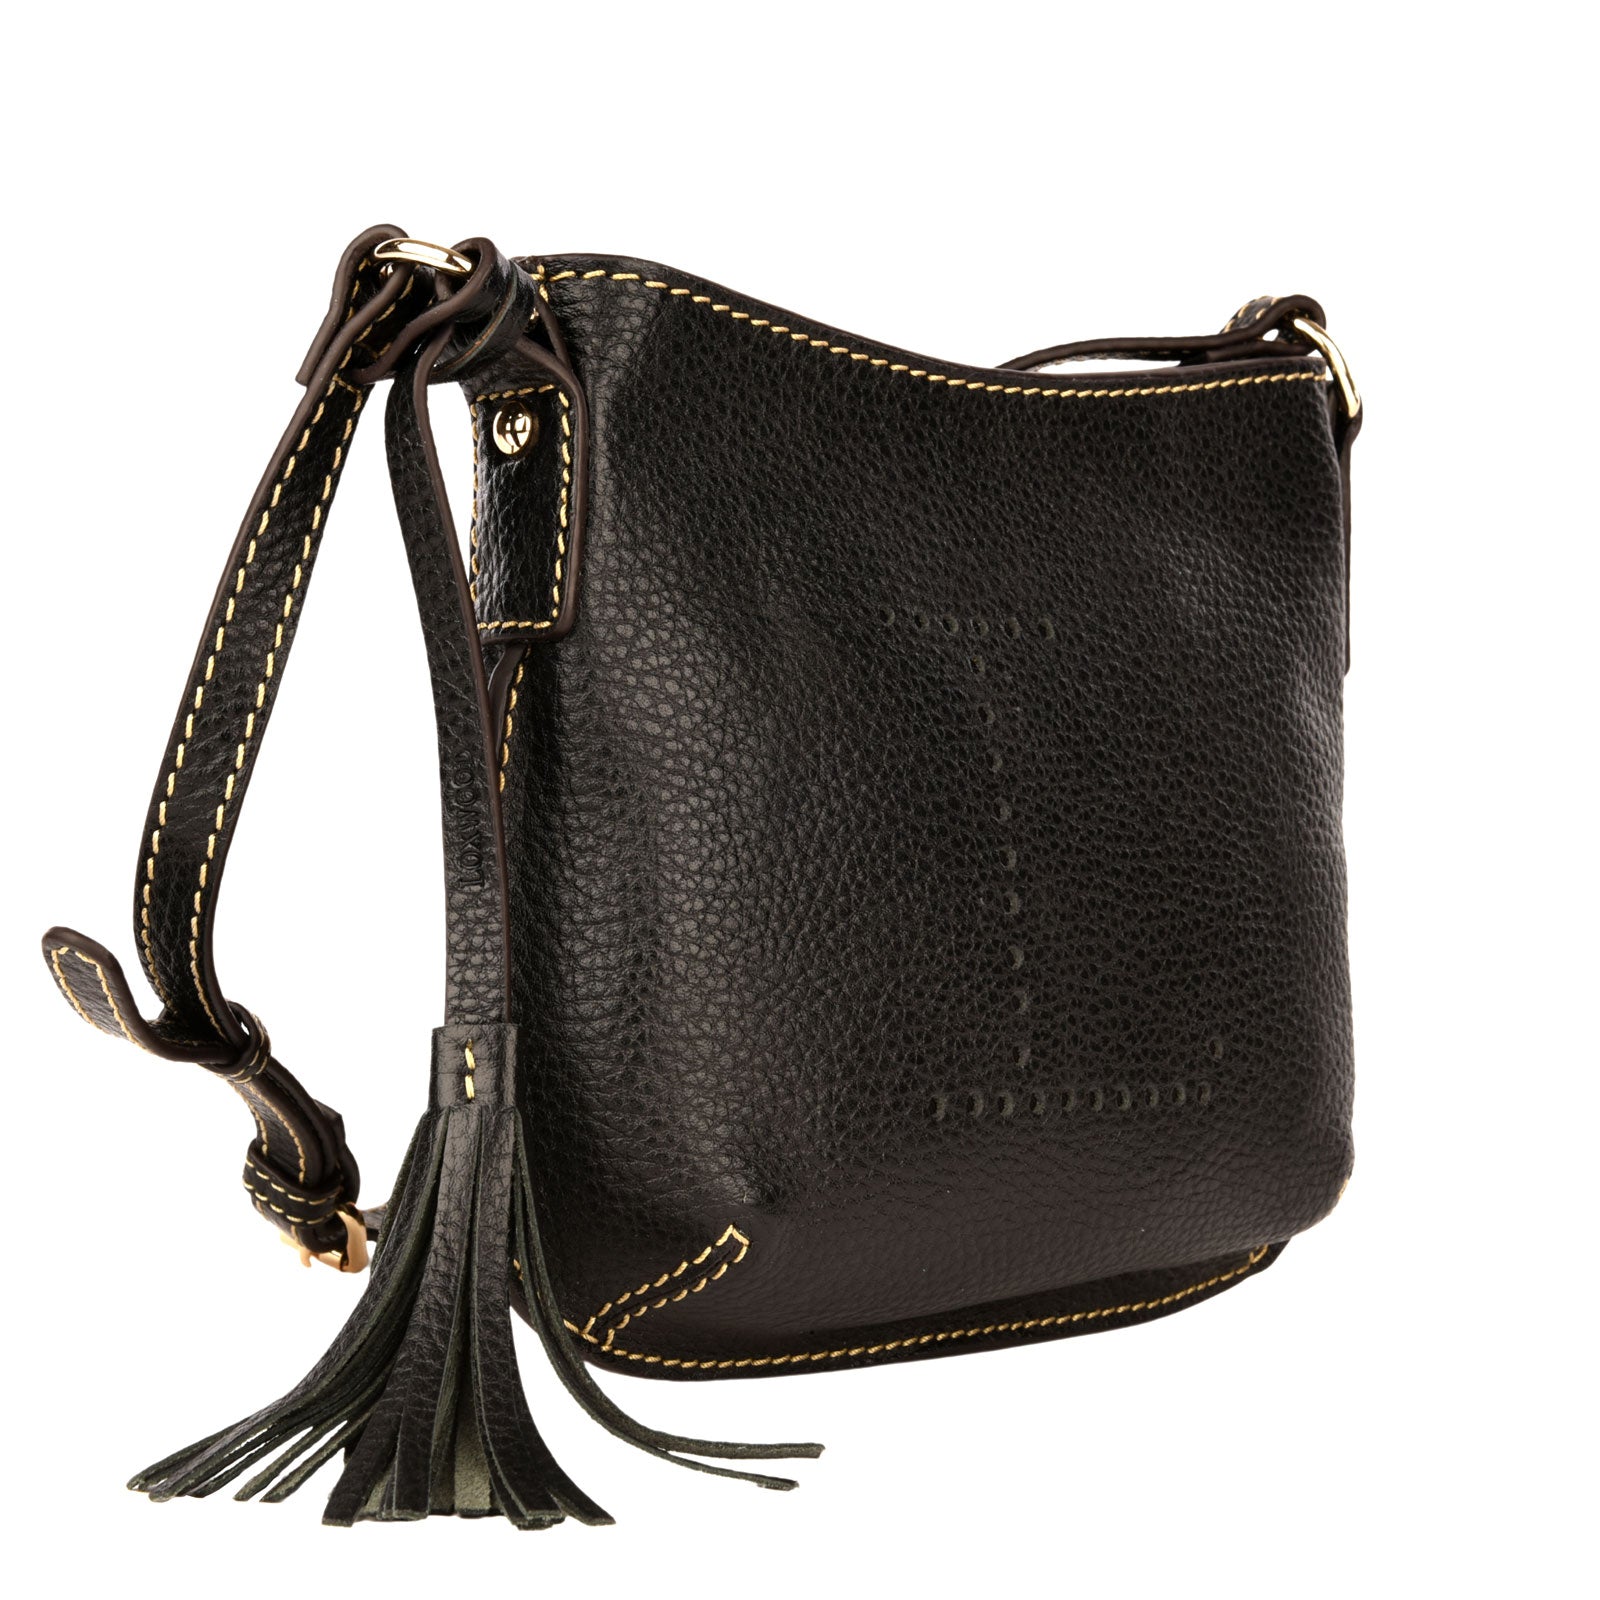 MINI CELIA - Small grained leather messenger bag